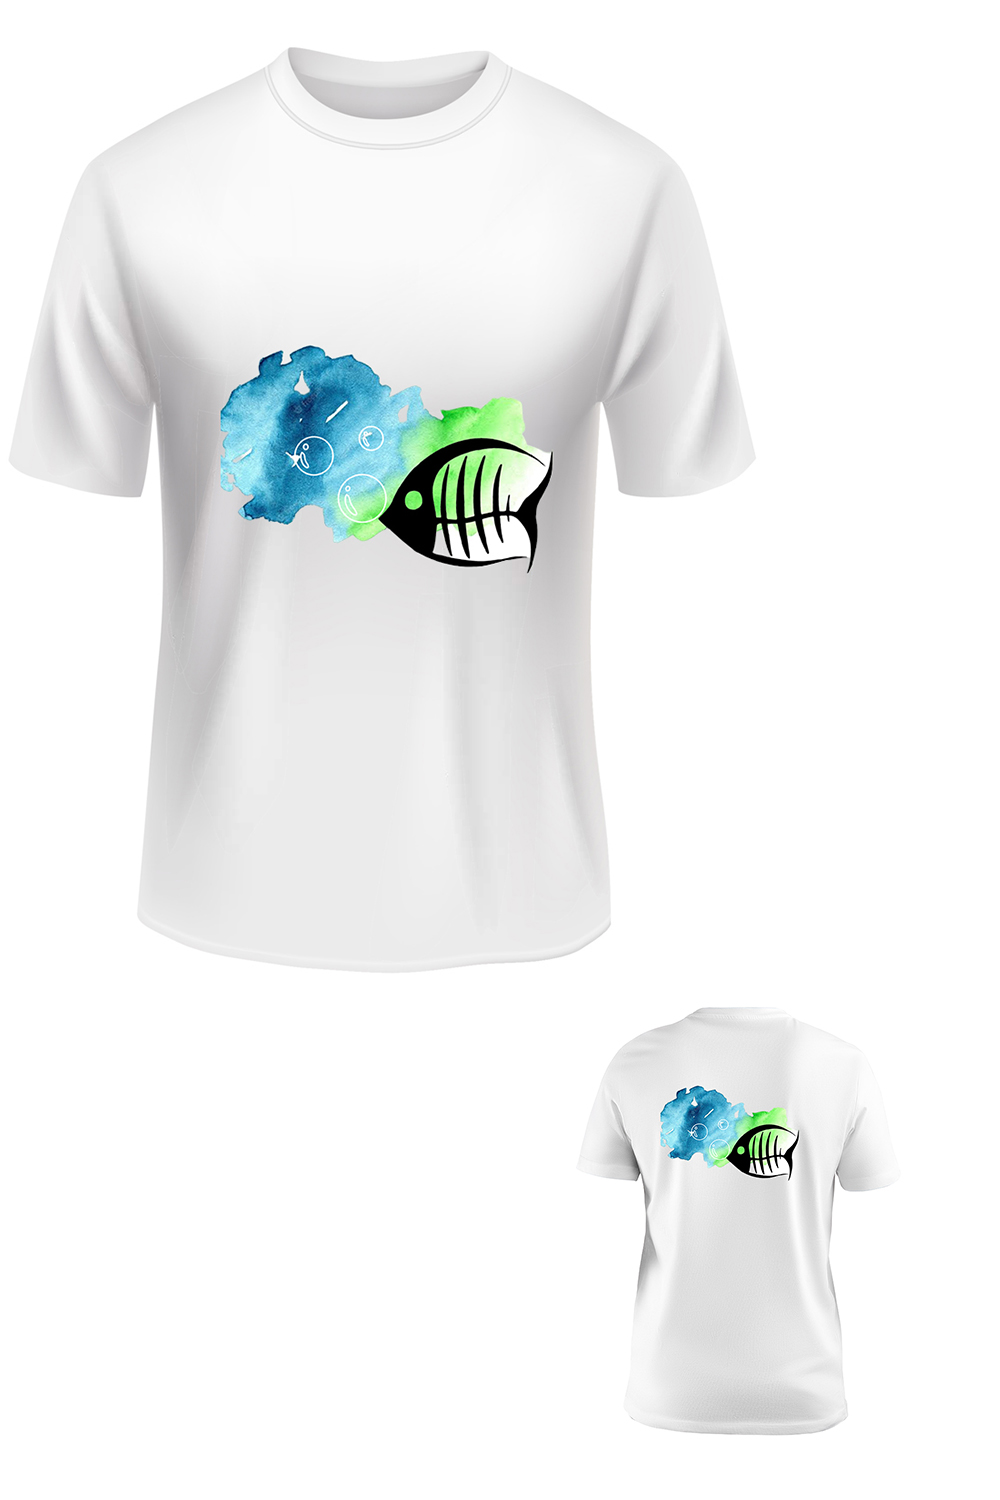 ti shirt design for printing fish both 769